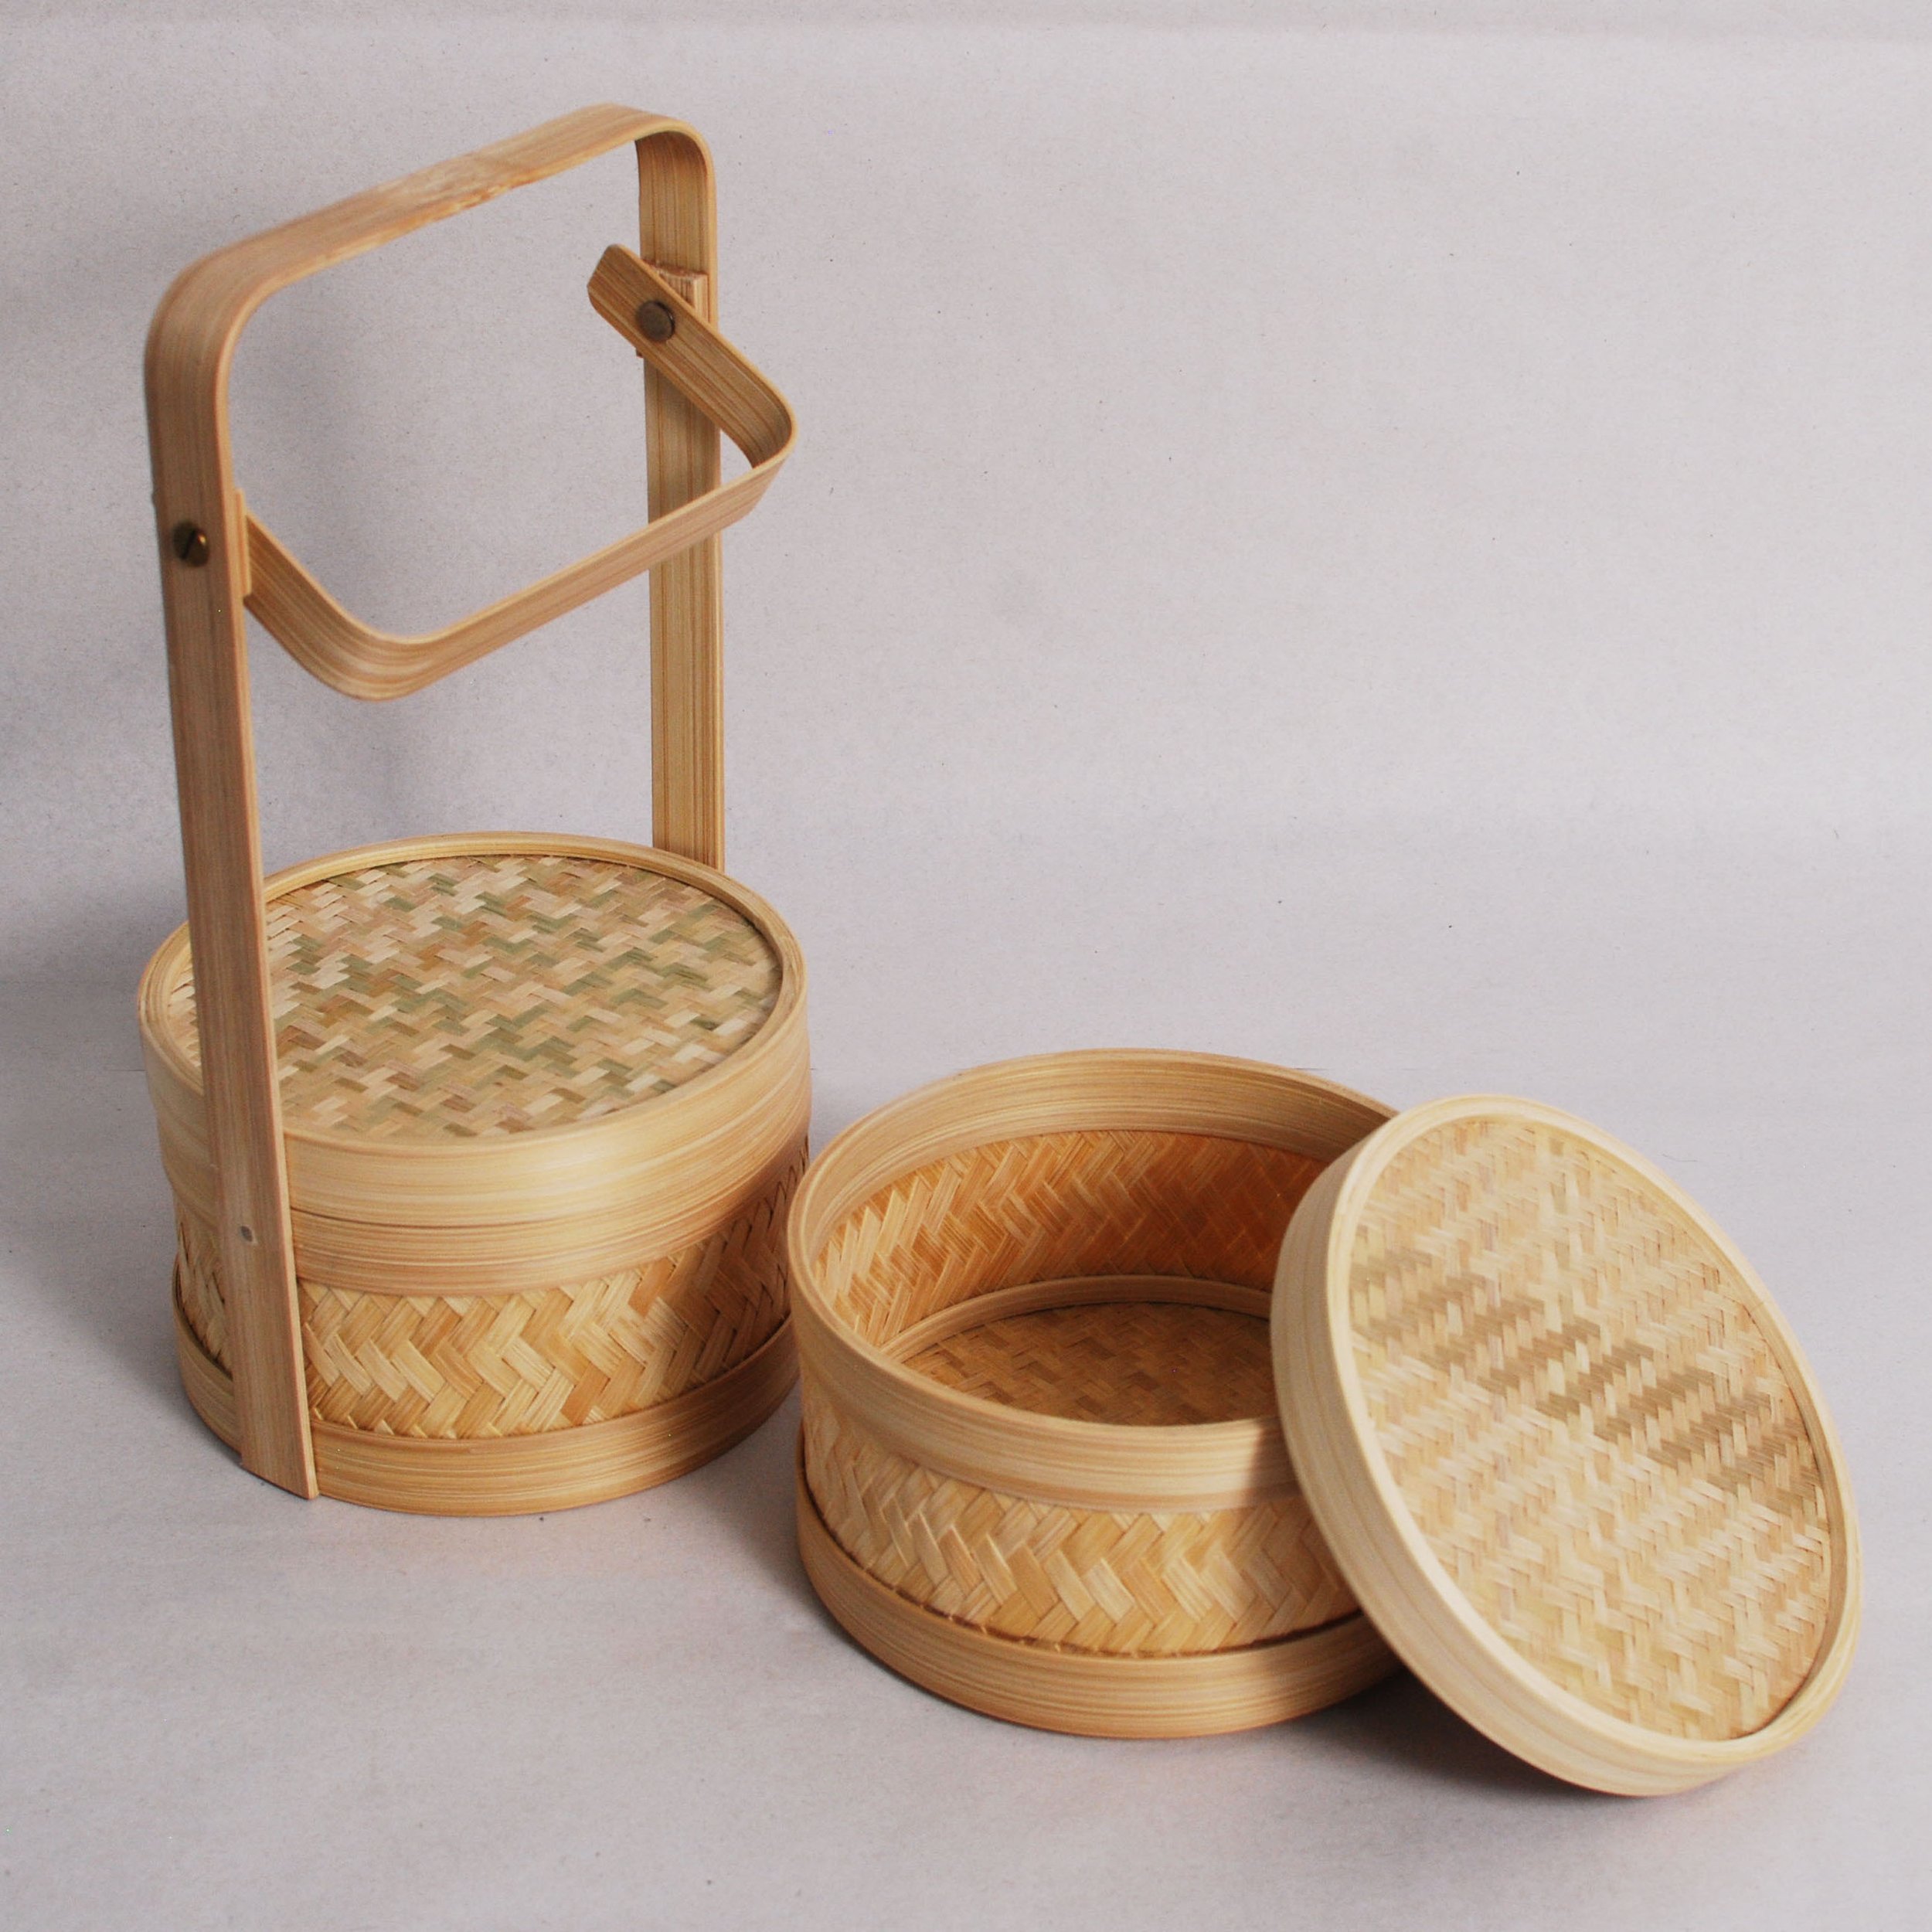 rachman & sons-basket-tray-set 6-for web.jpg